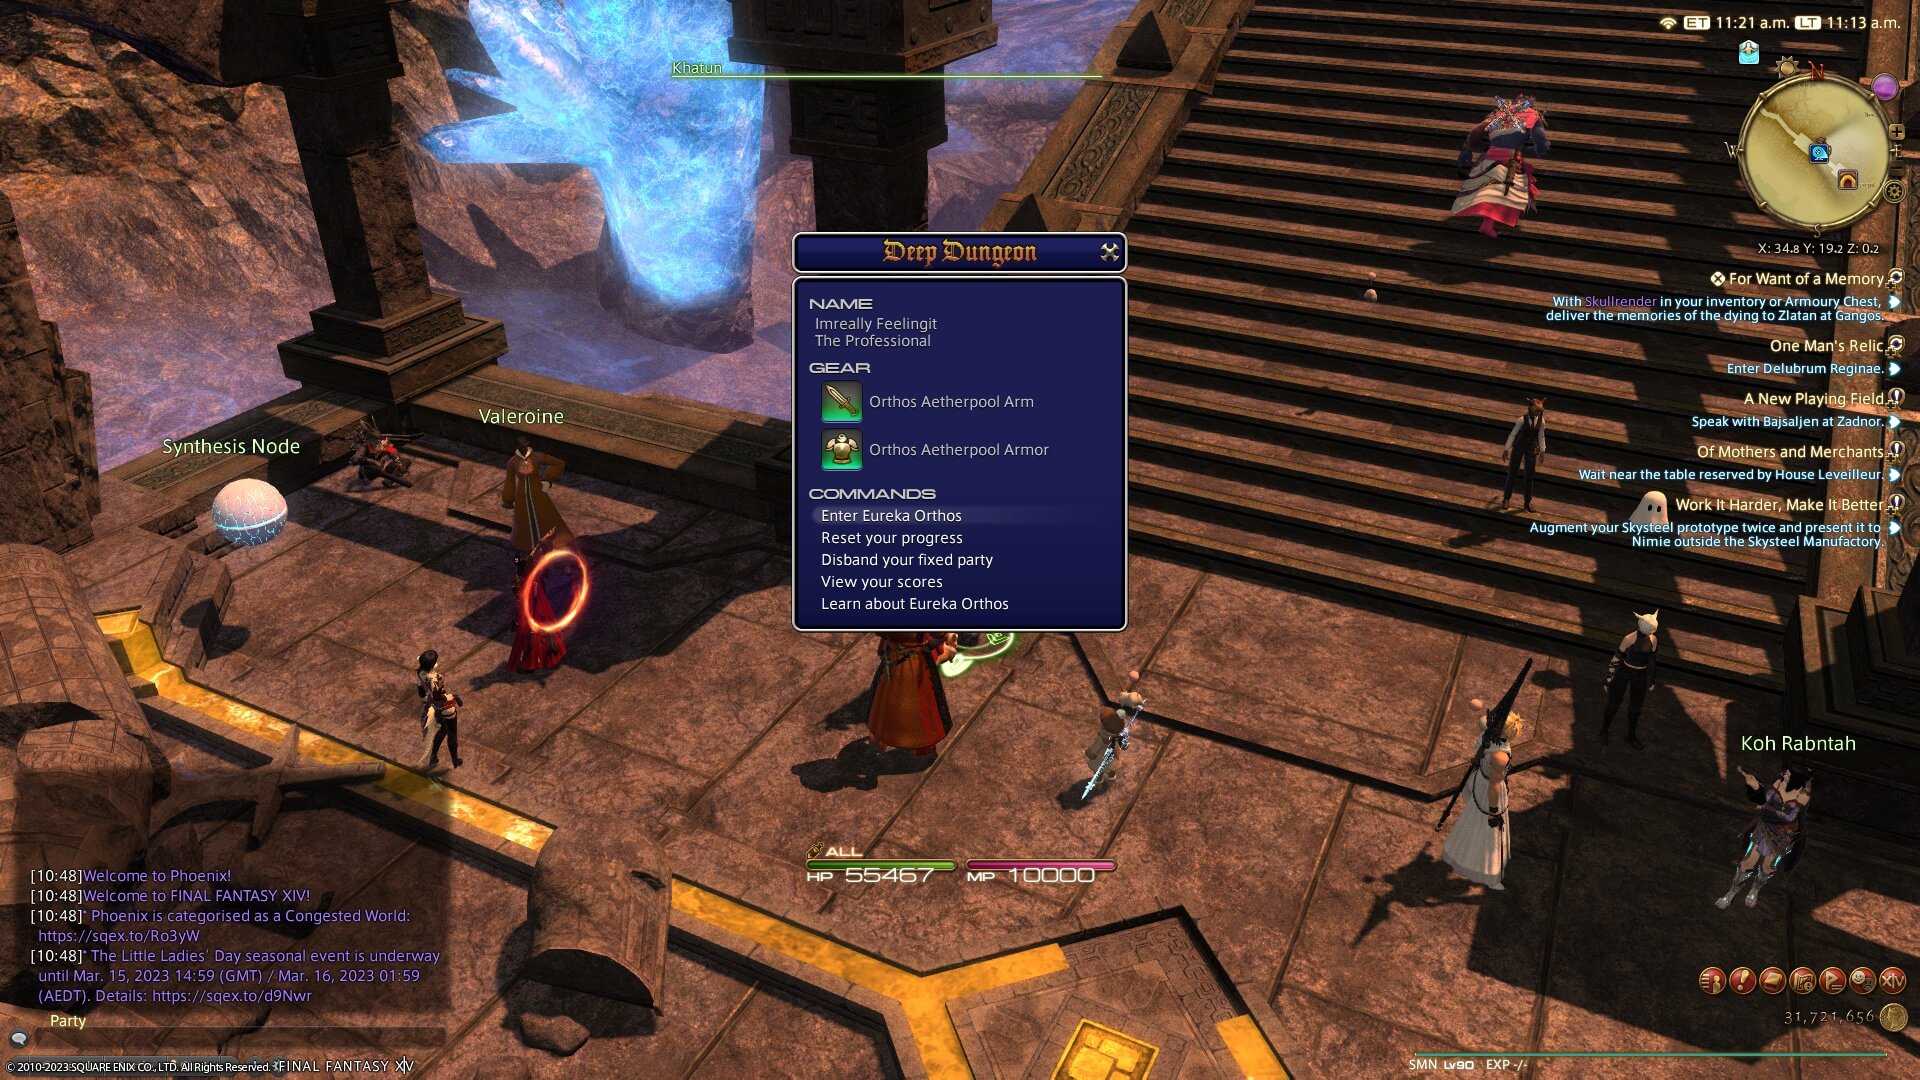 Viewing the Fantasy XIV Eureka Orthos main menu screen, with "Enter Eureka Orthos" highlighted.